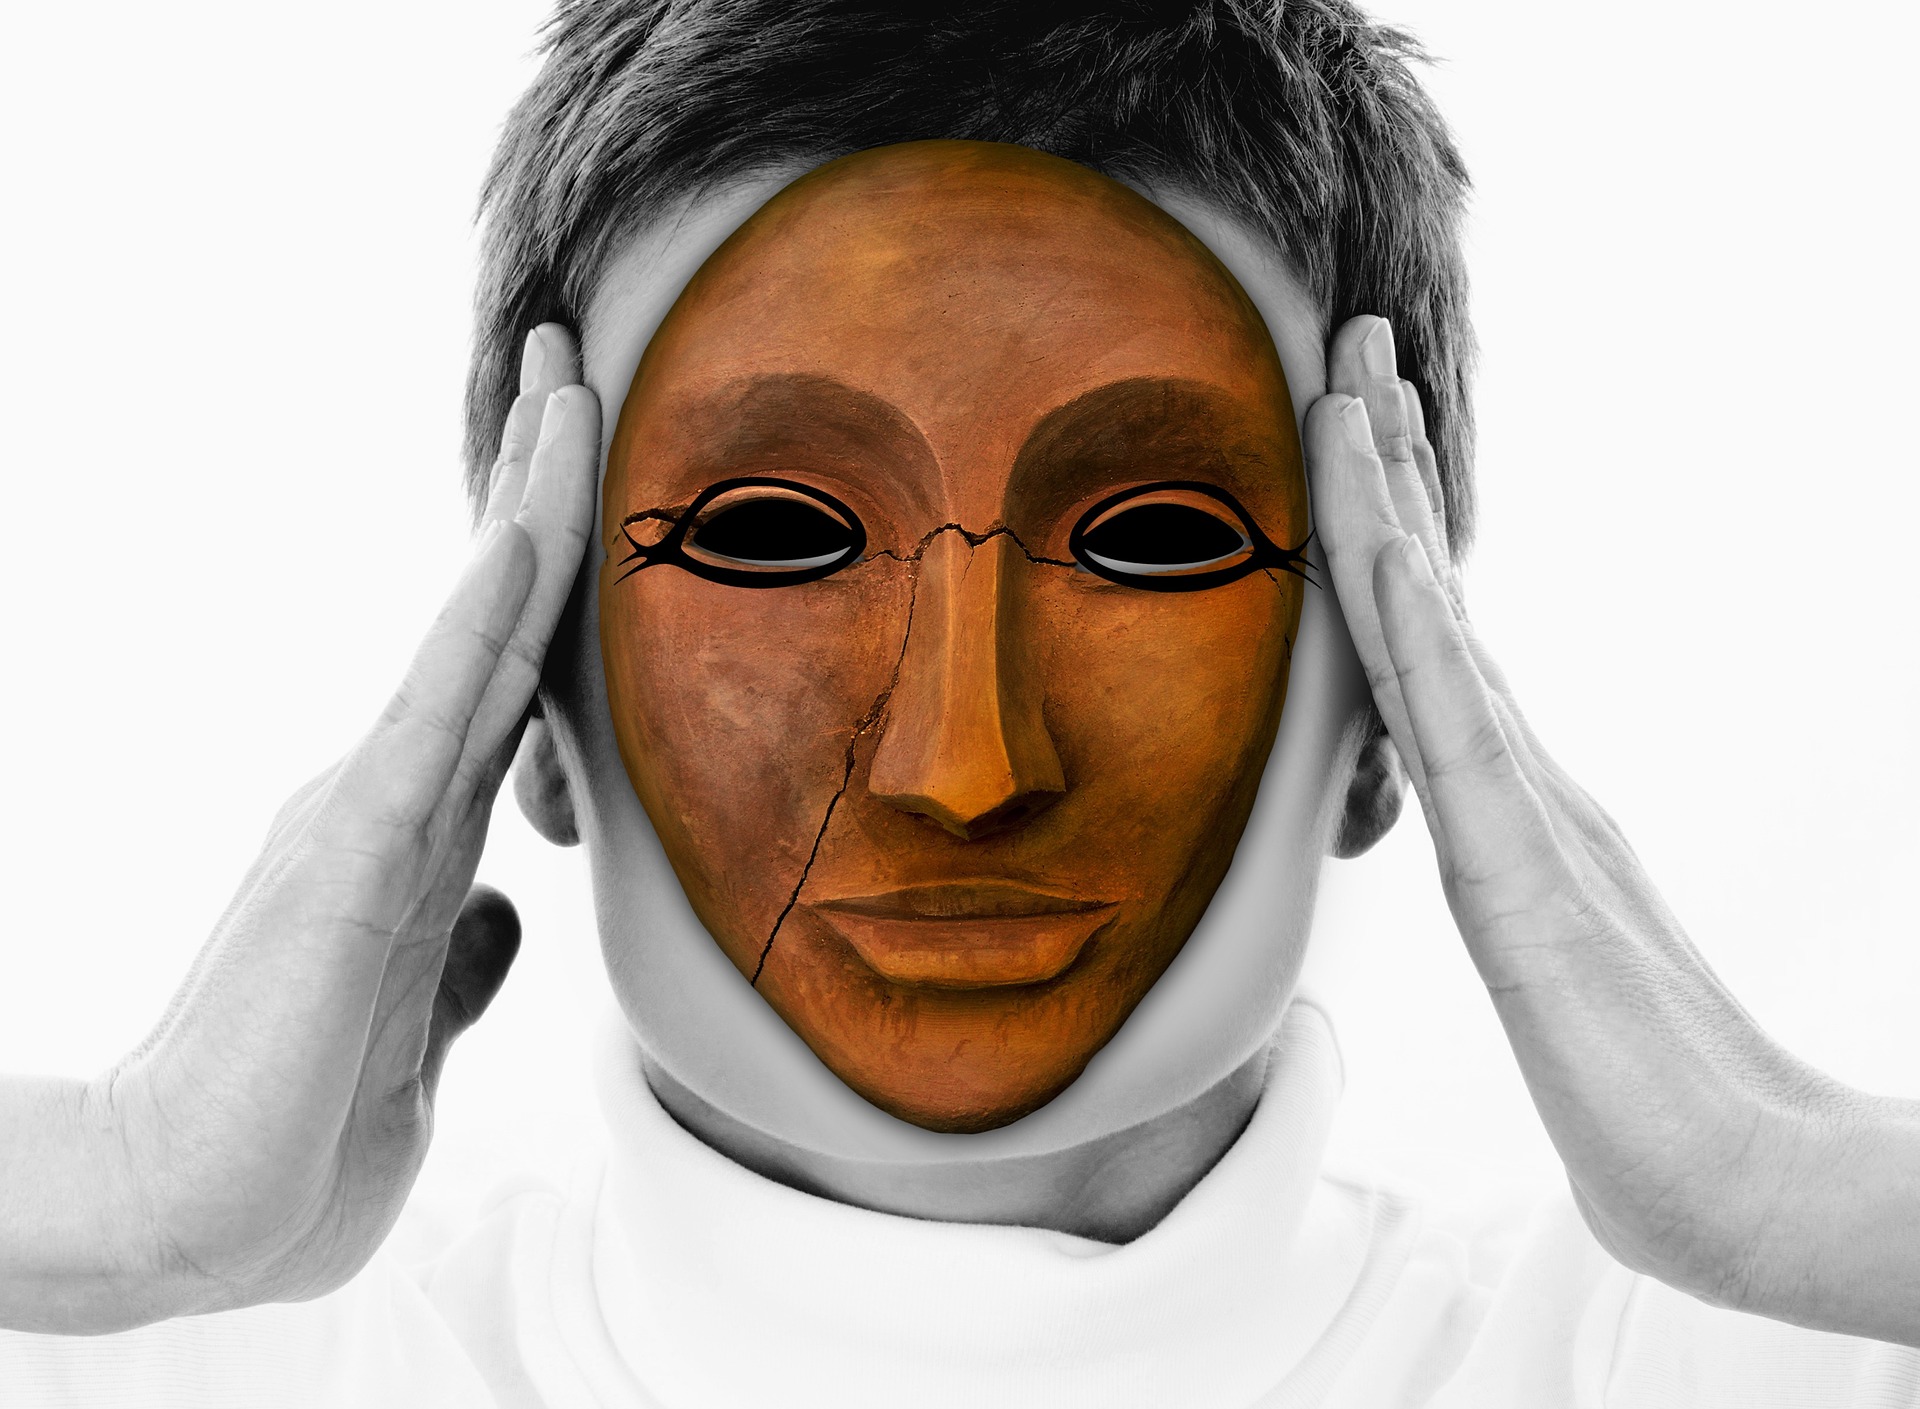 linkedin-scam-face-mask-hidden-identity